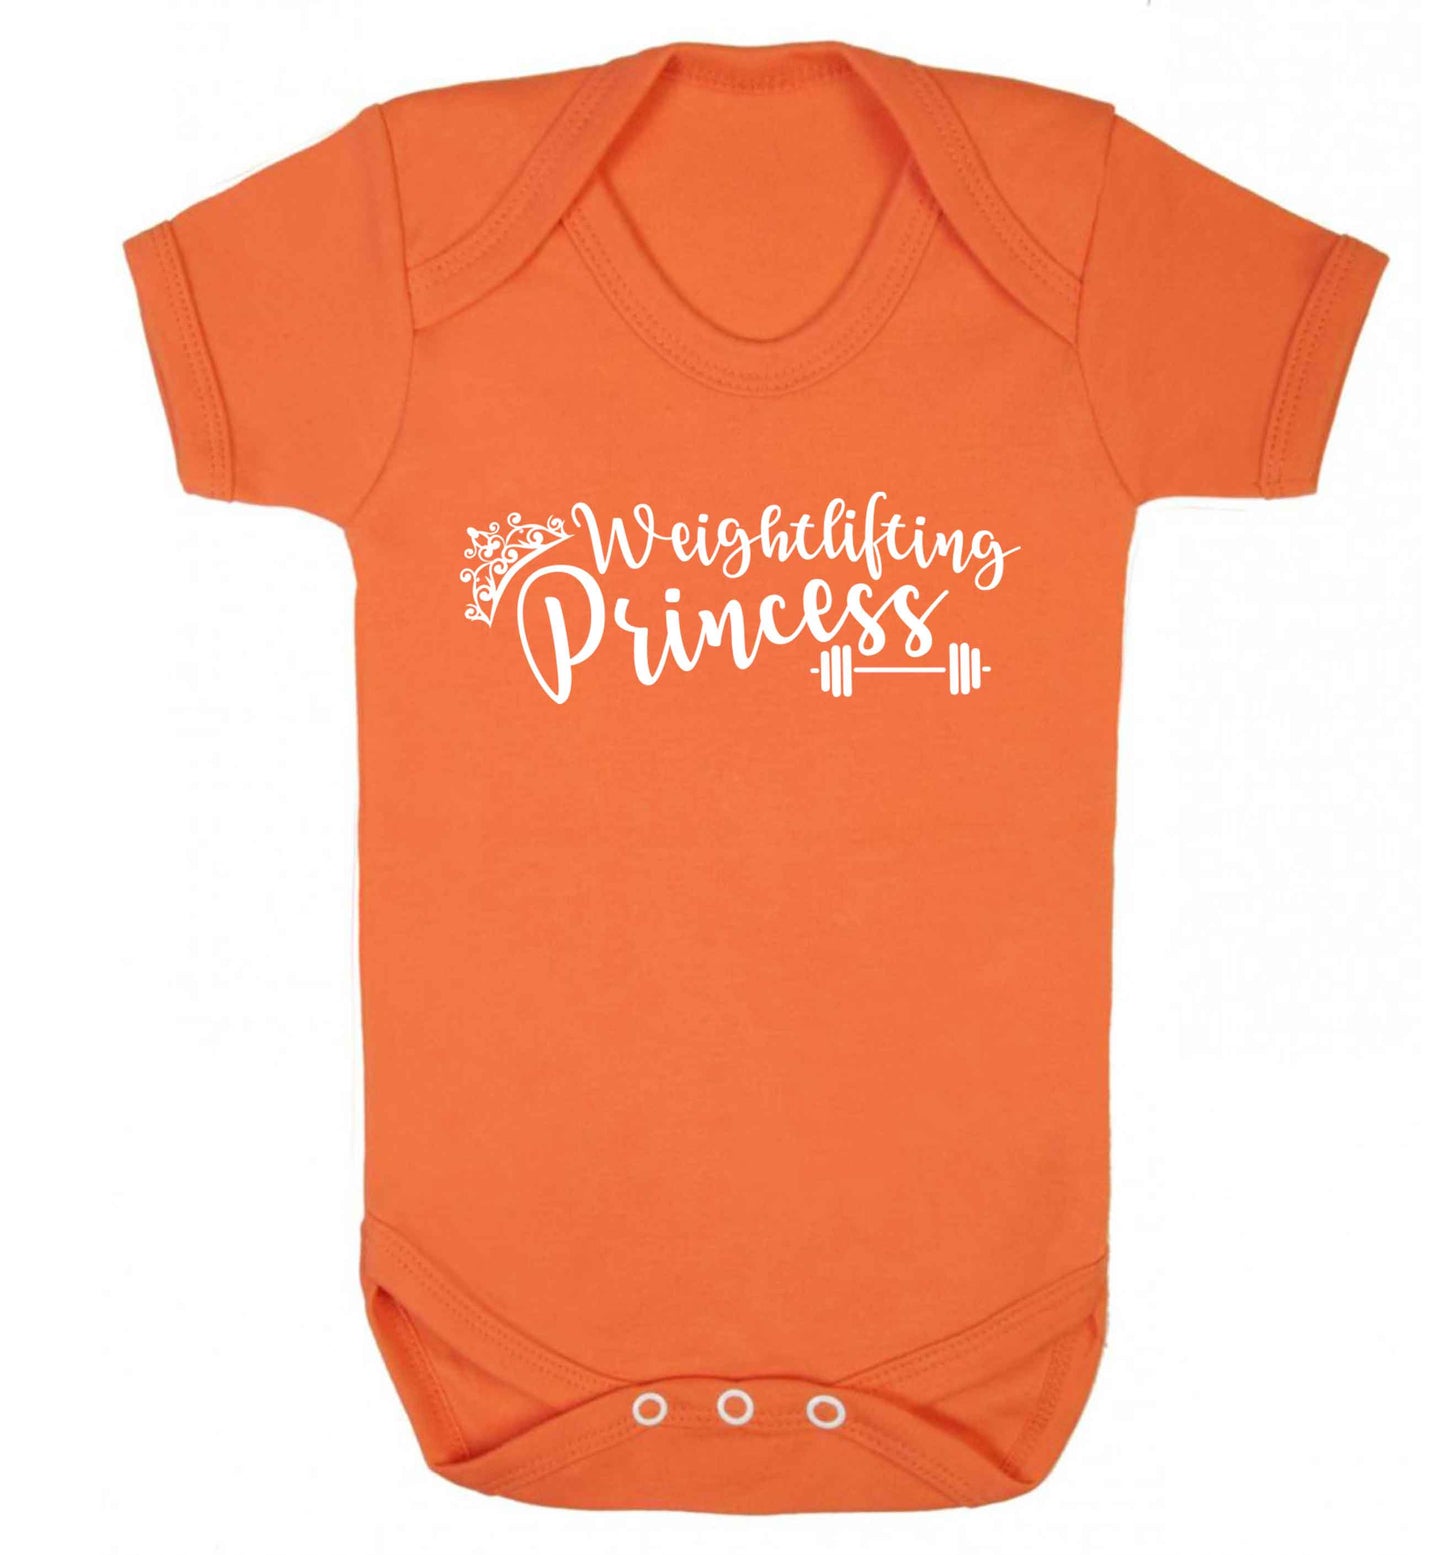 Weightlifting princess Baby Vest orange 18-24 months